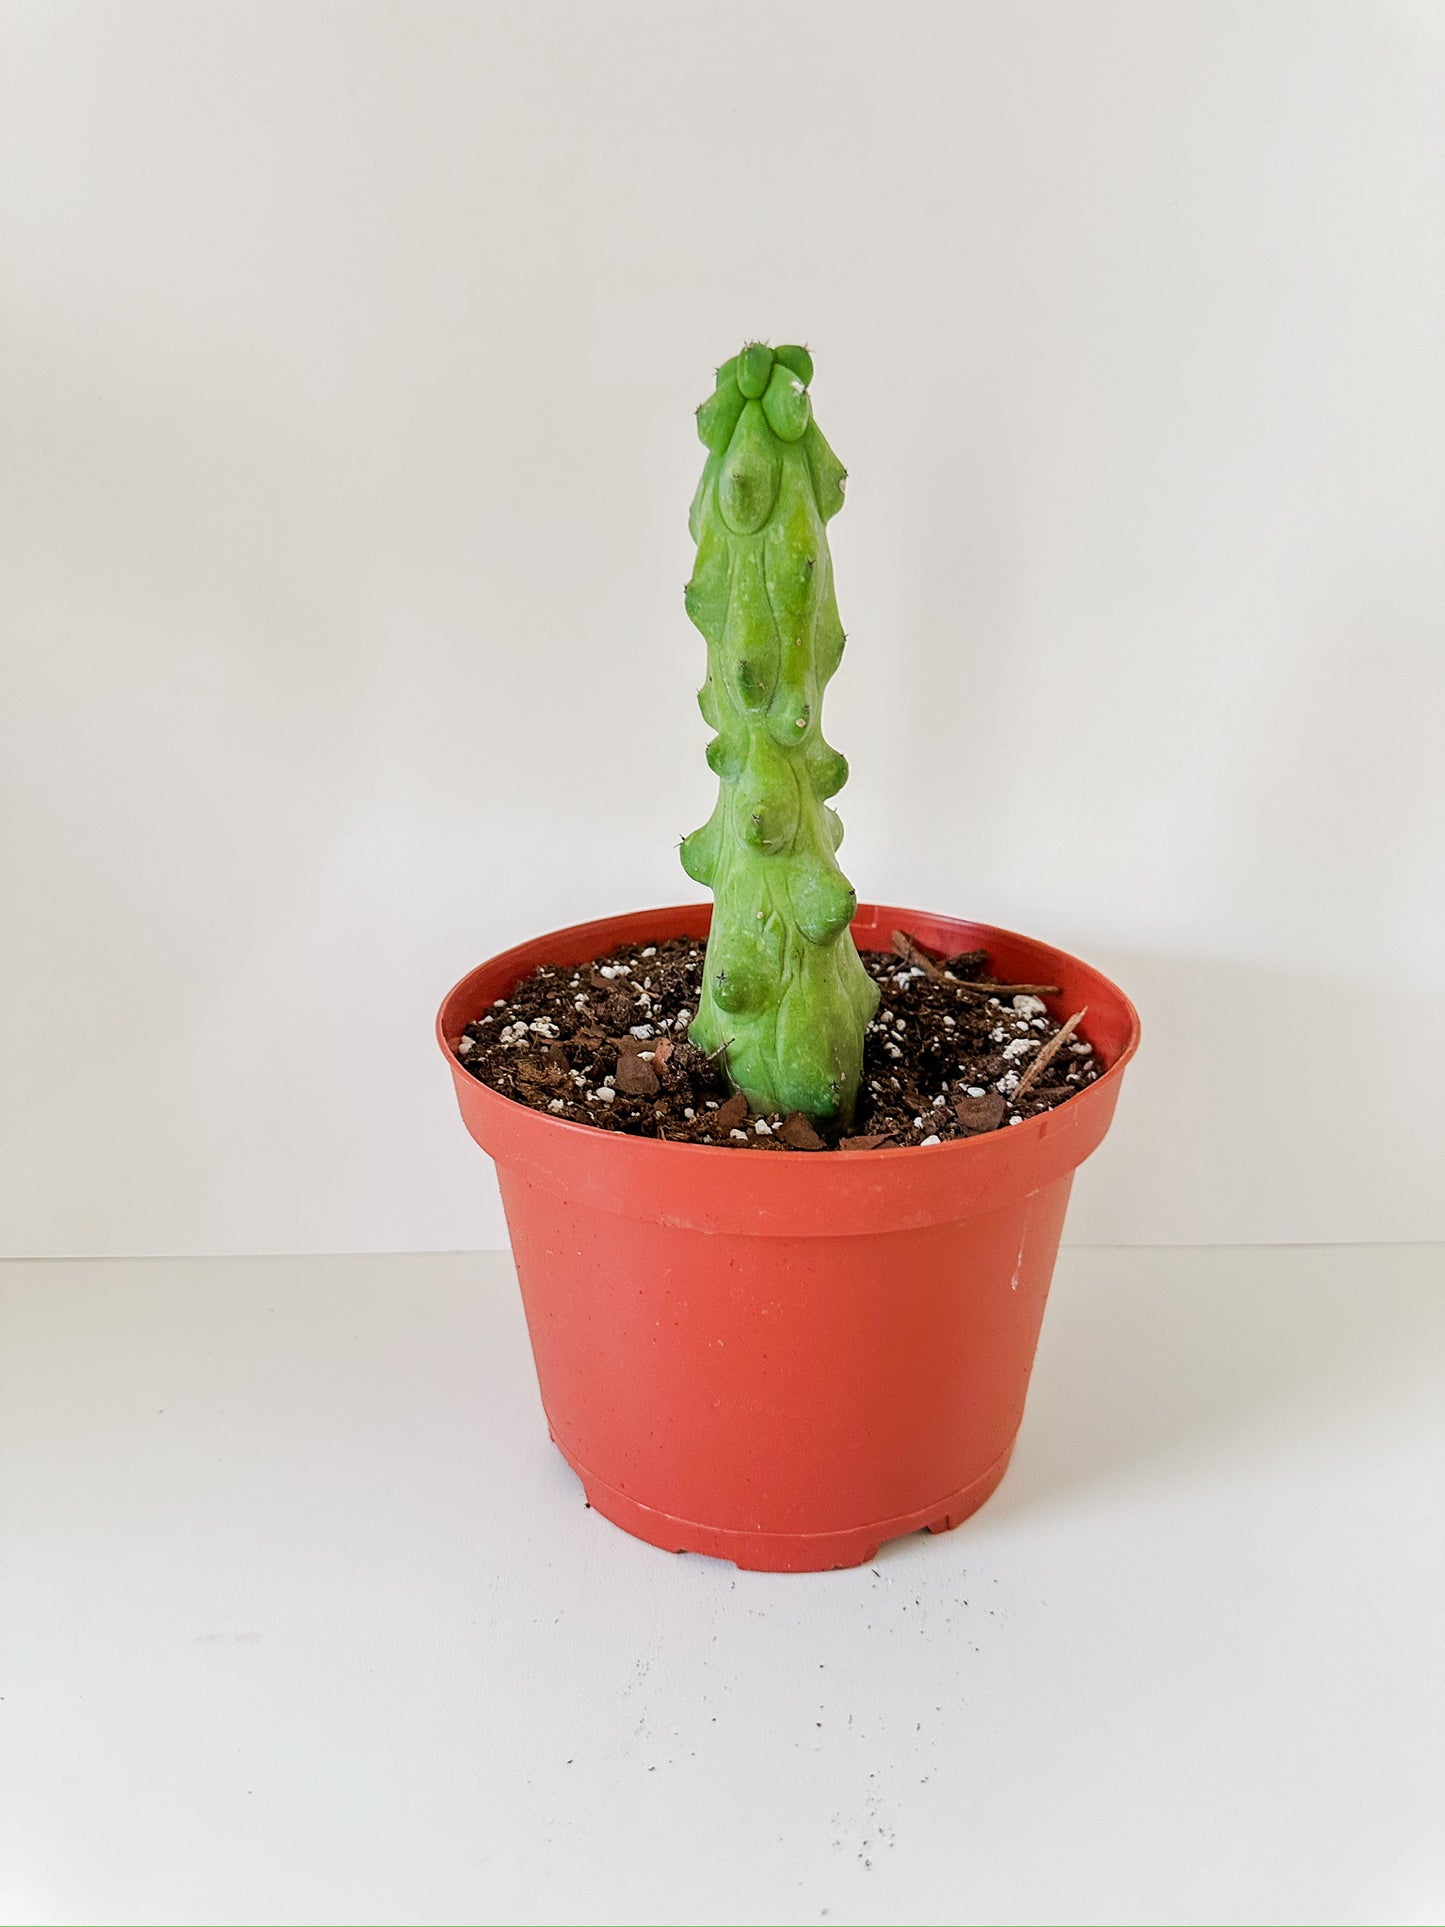 'B00bie Cactus' Myrtillocactus Geometrizans 'Fukurokuryuzinboku'